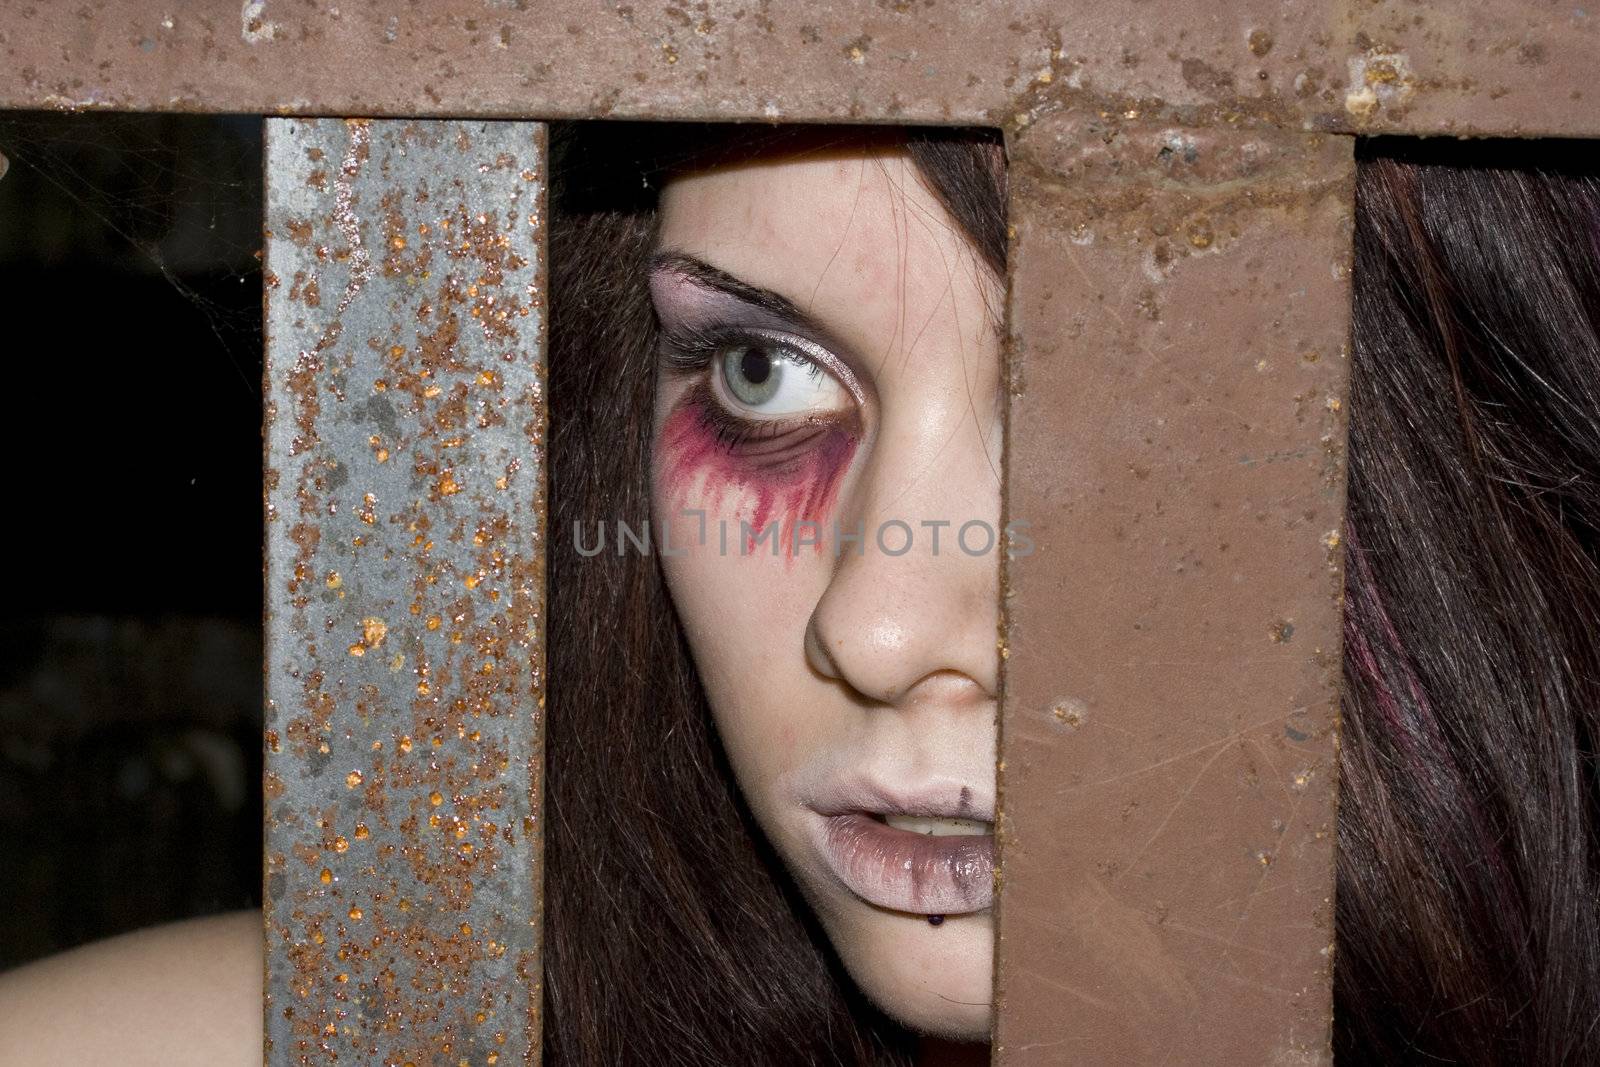 The girl-vampire behind an iron rusty lattice